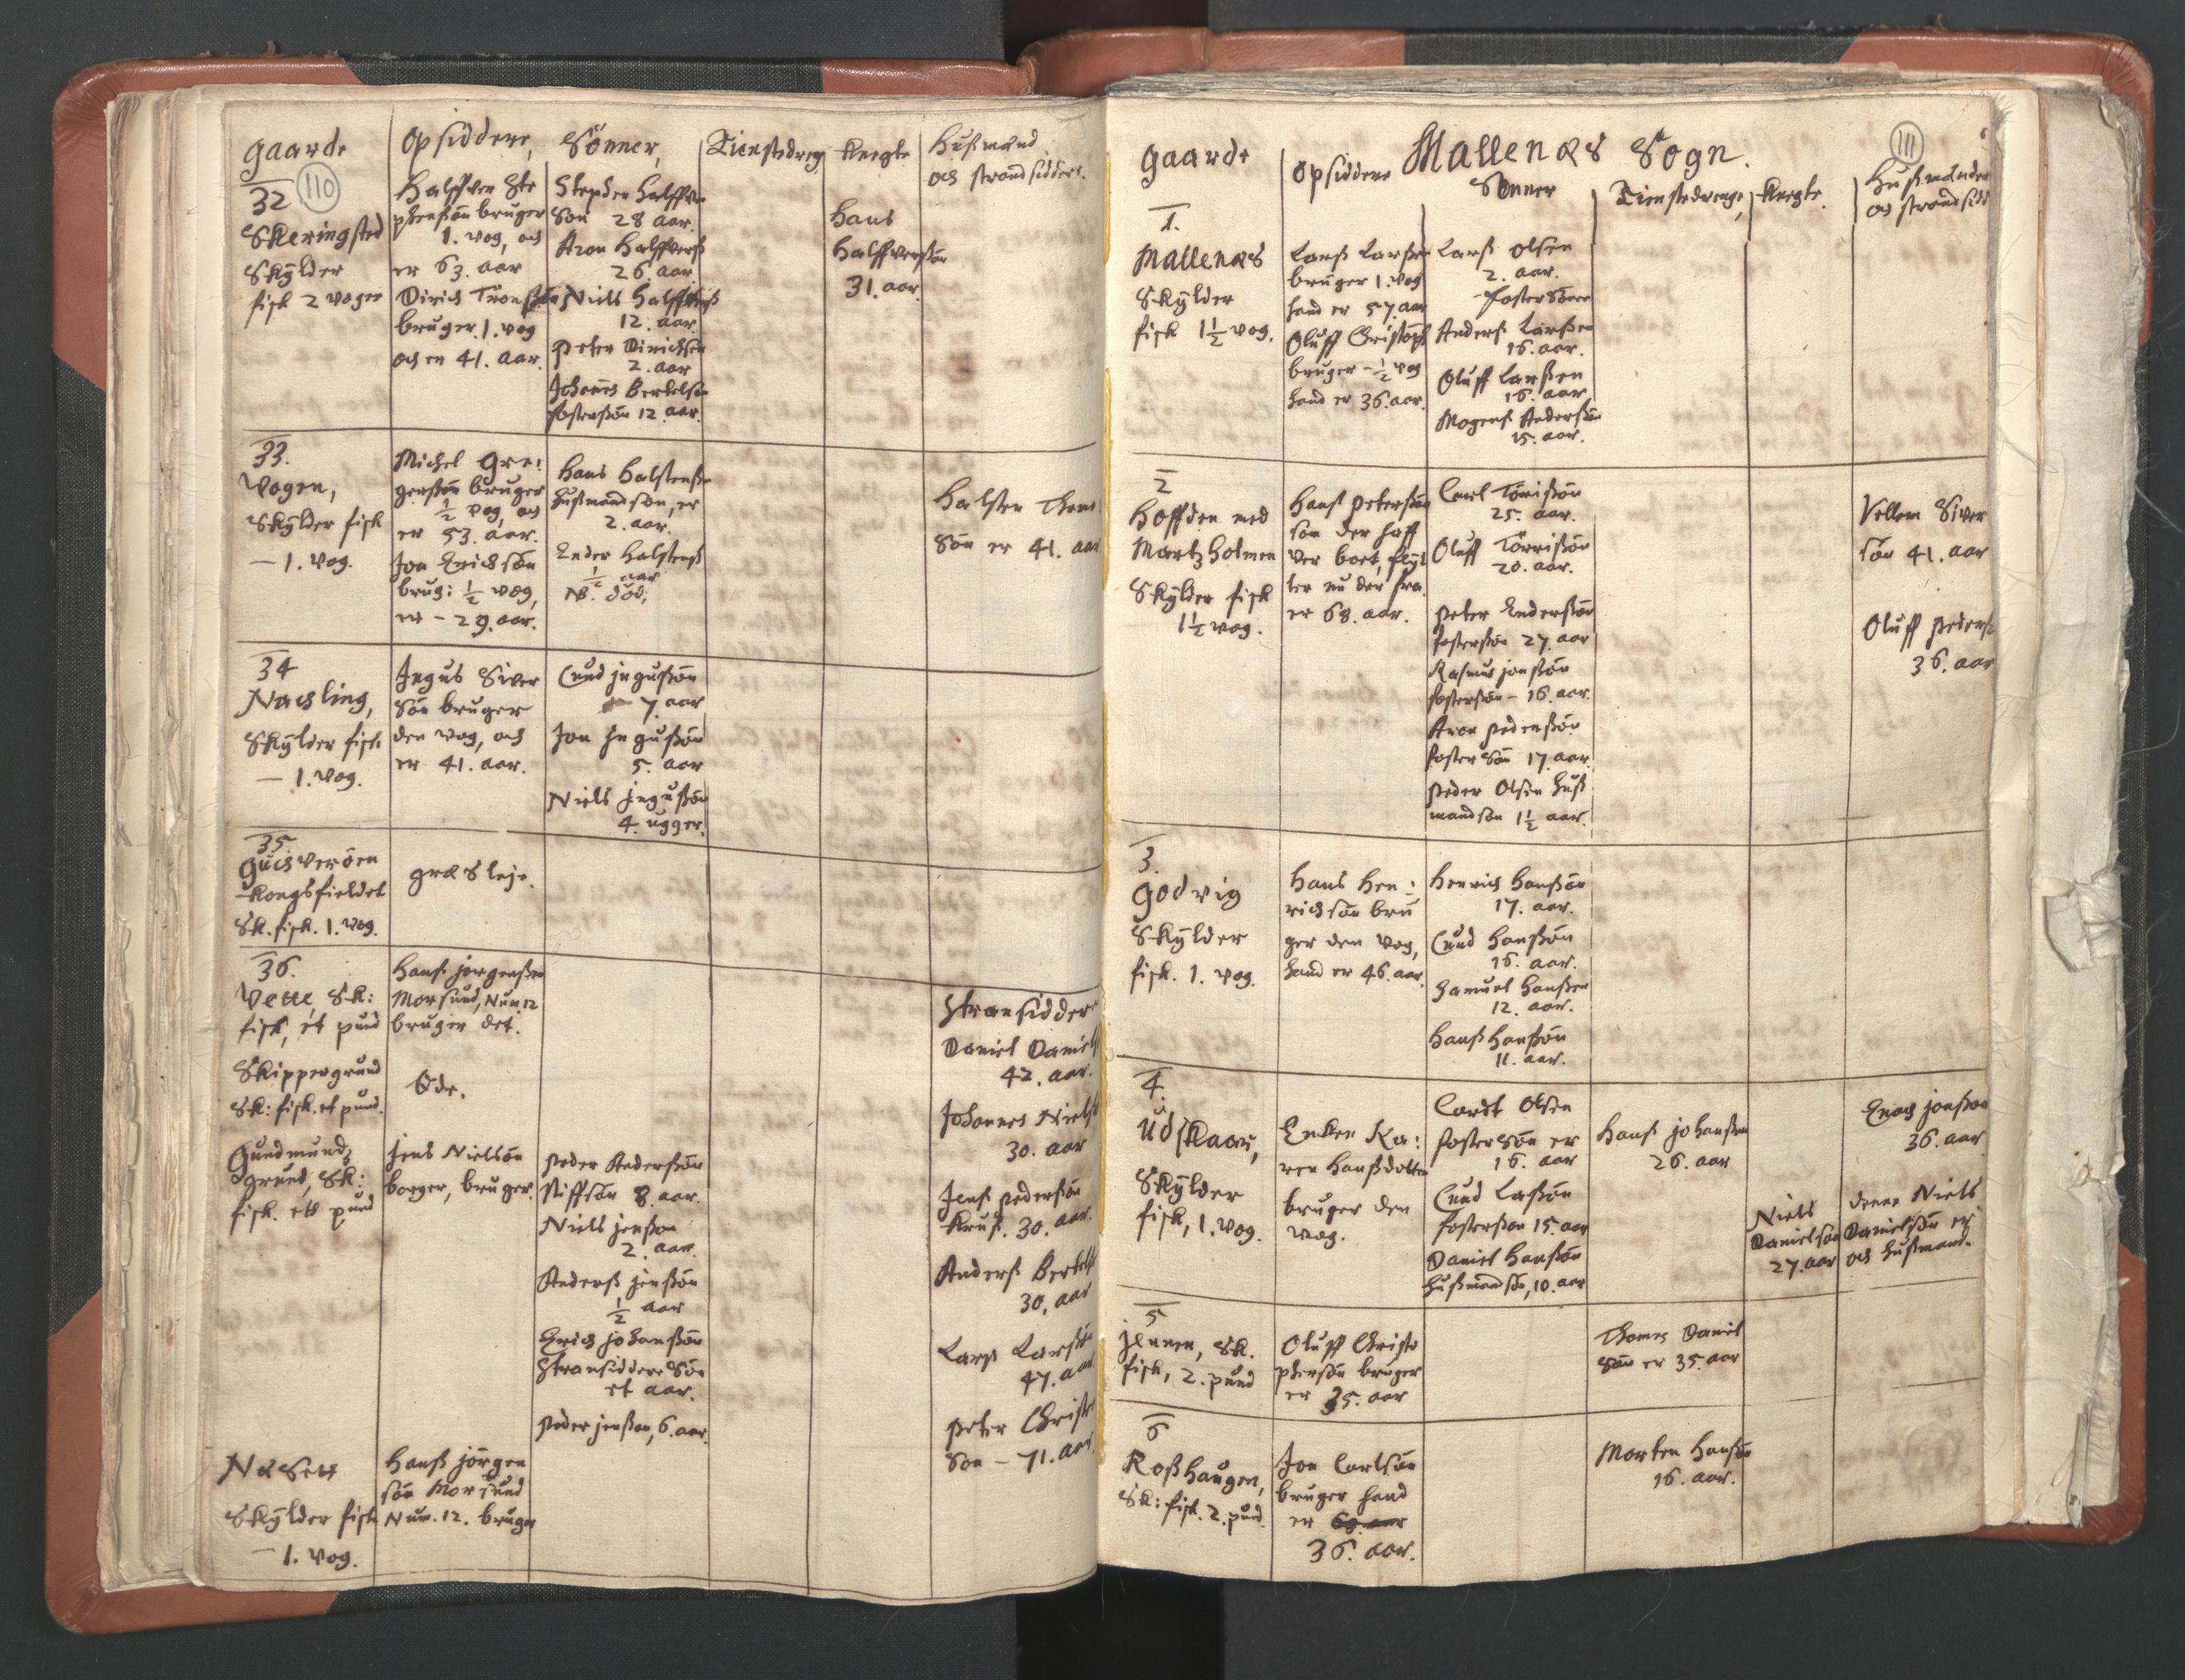 RA, Vicar's Census 1664-1666, no. 36: Lofoten and Vesterålen deanery, Senja deanery and Troms deanery, 1664-1666, p. 110-111